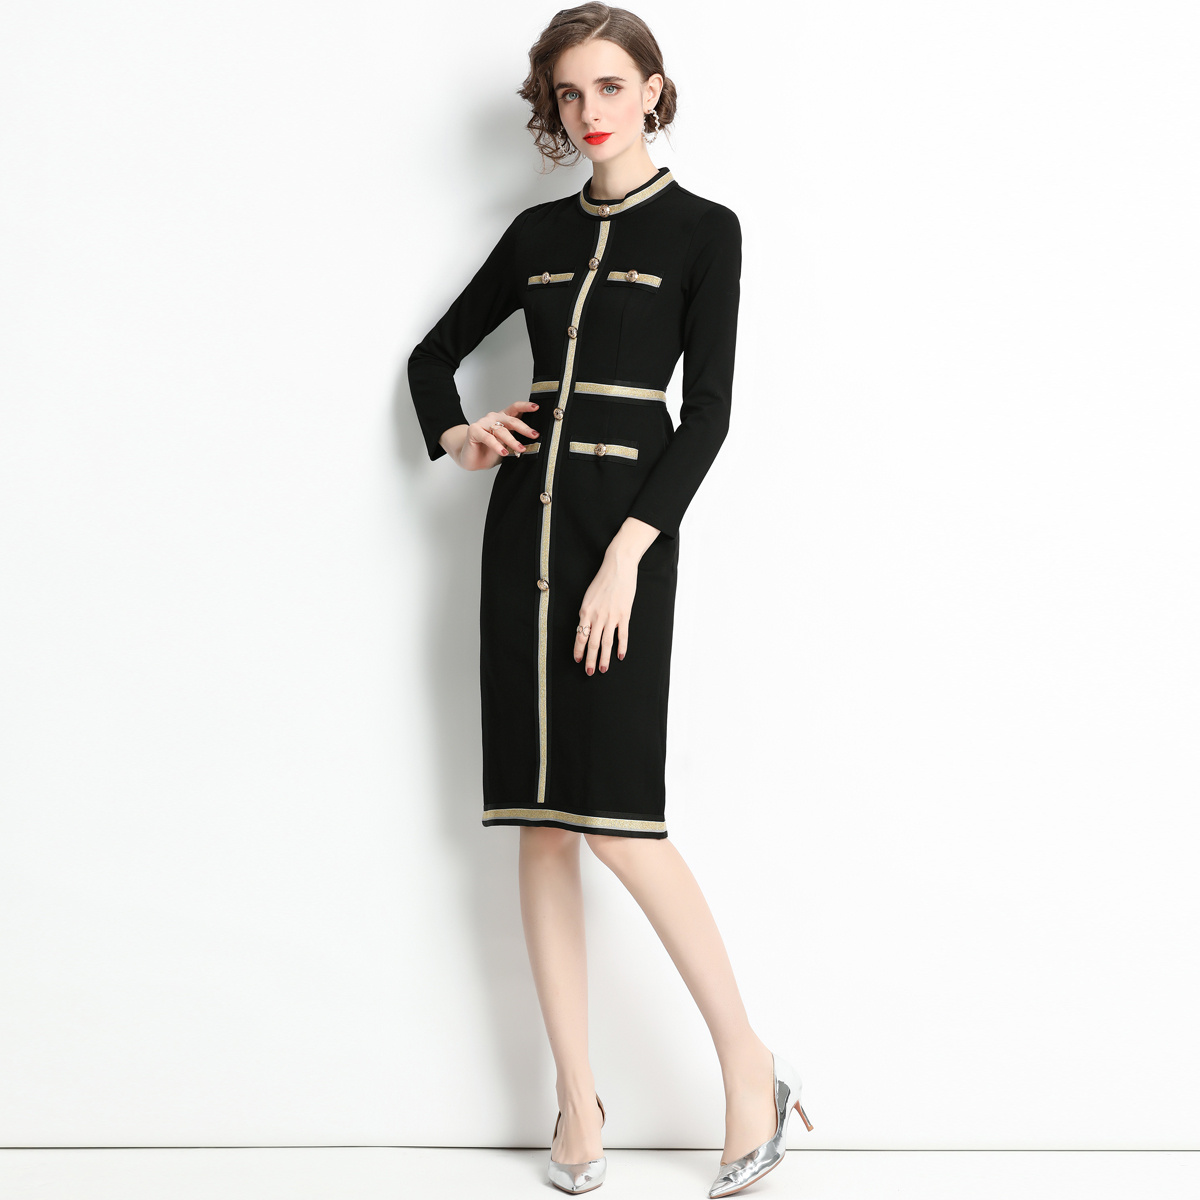 Cotton France style black rome fashion and elegant dress